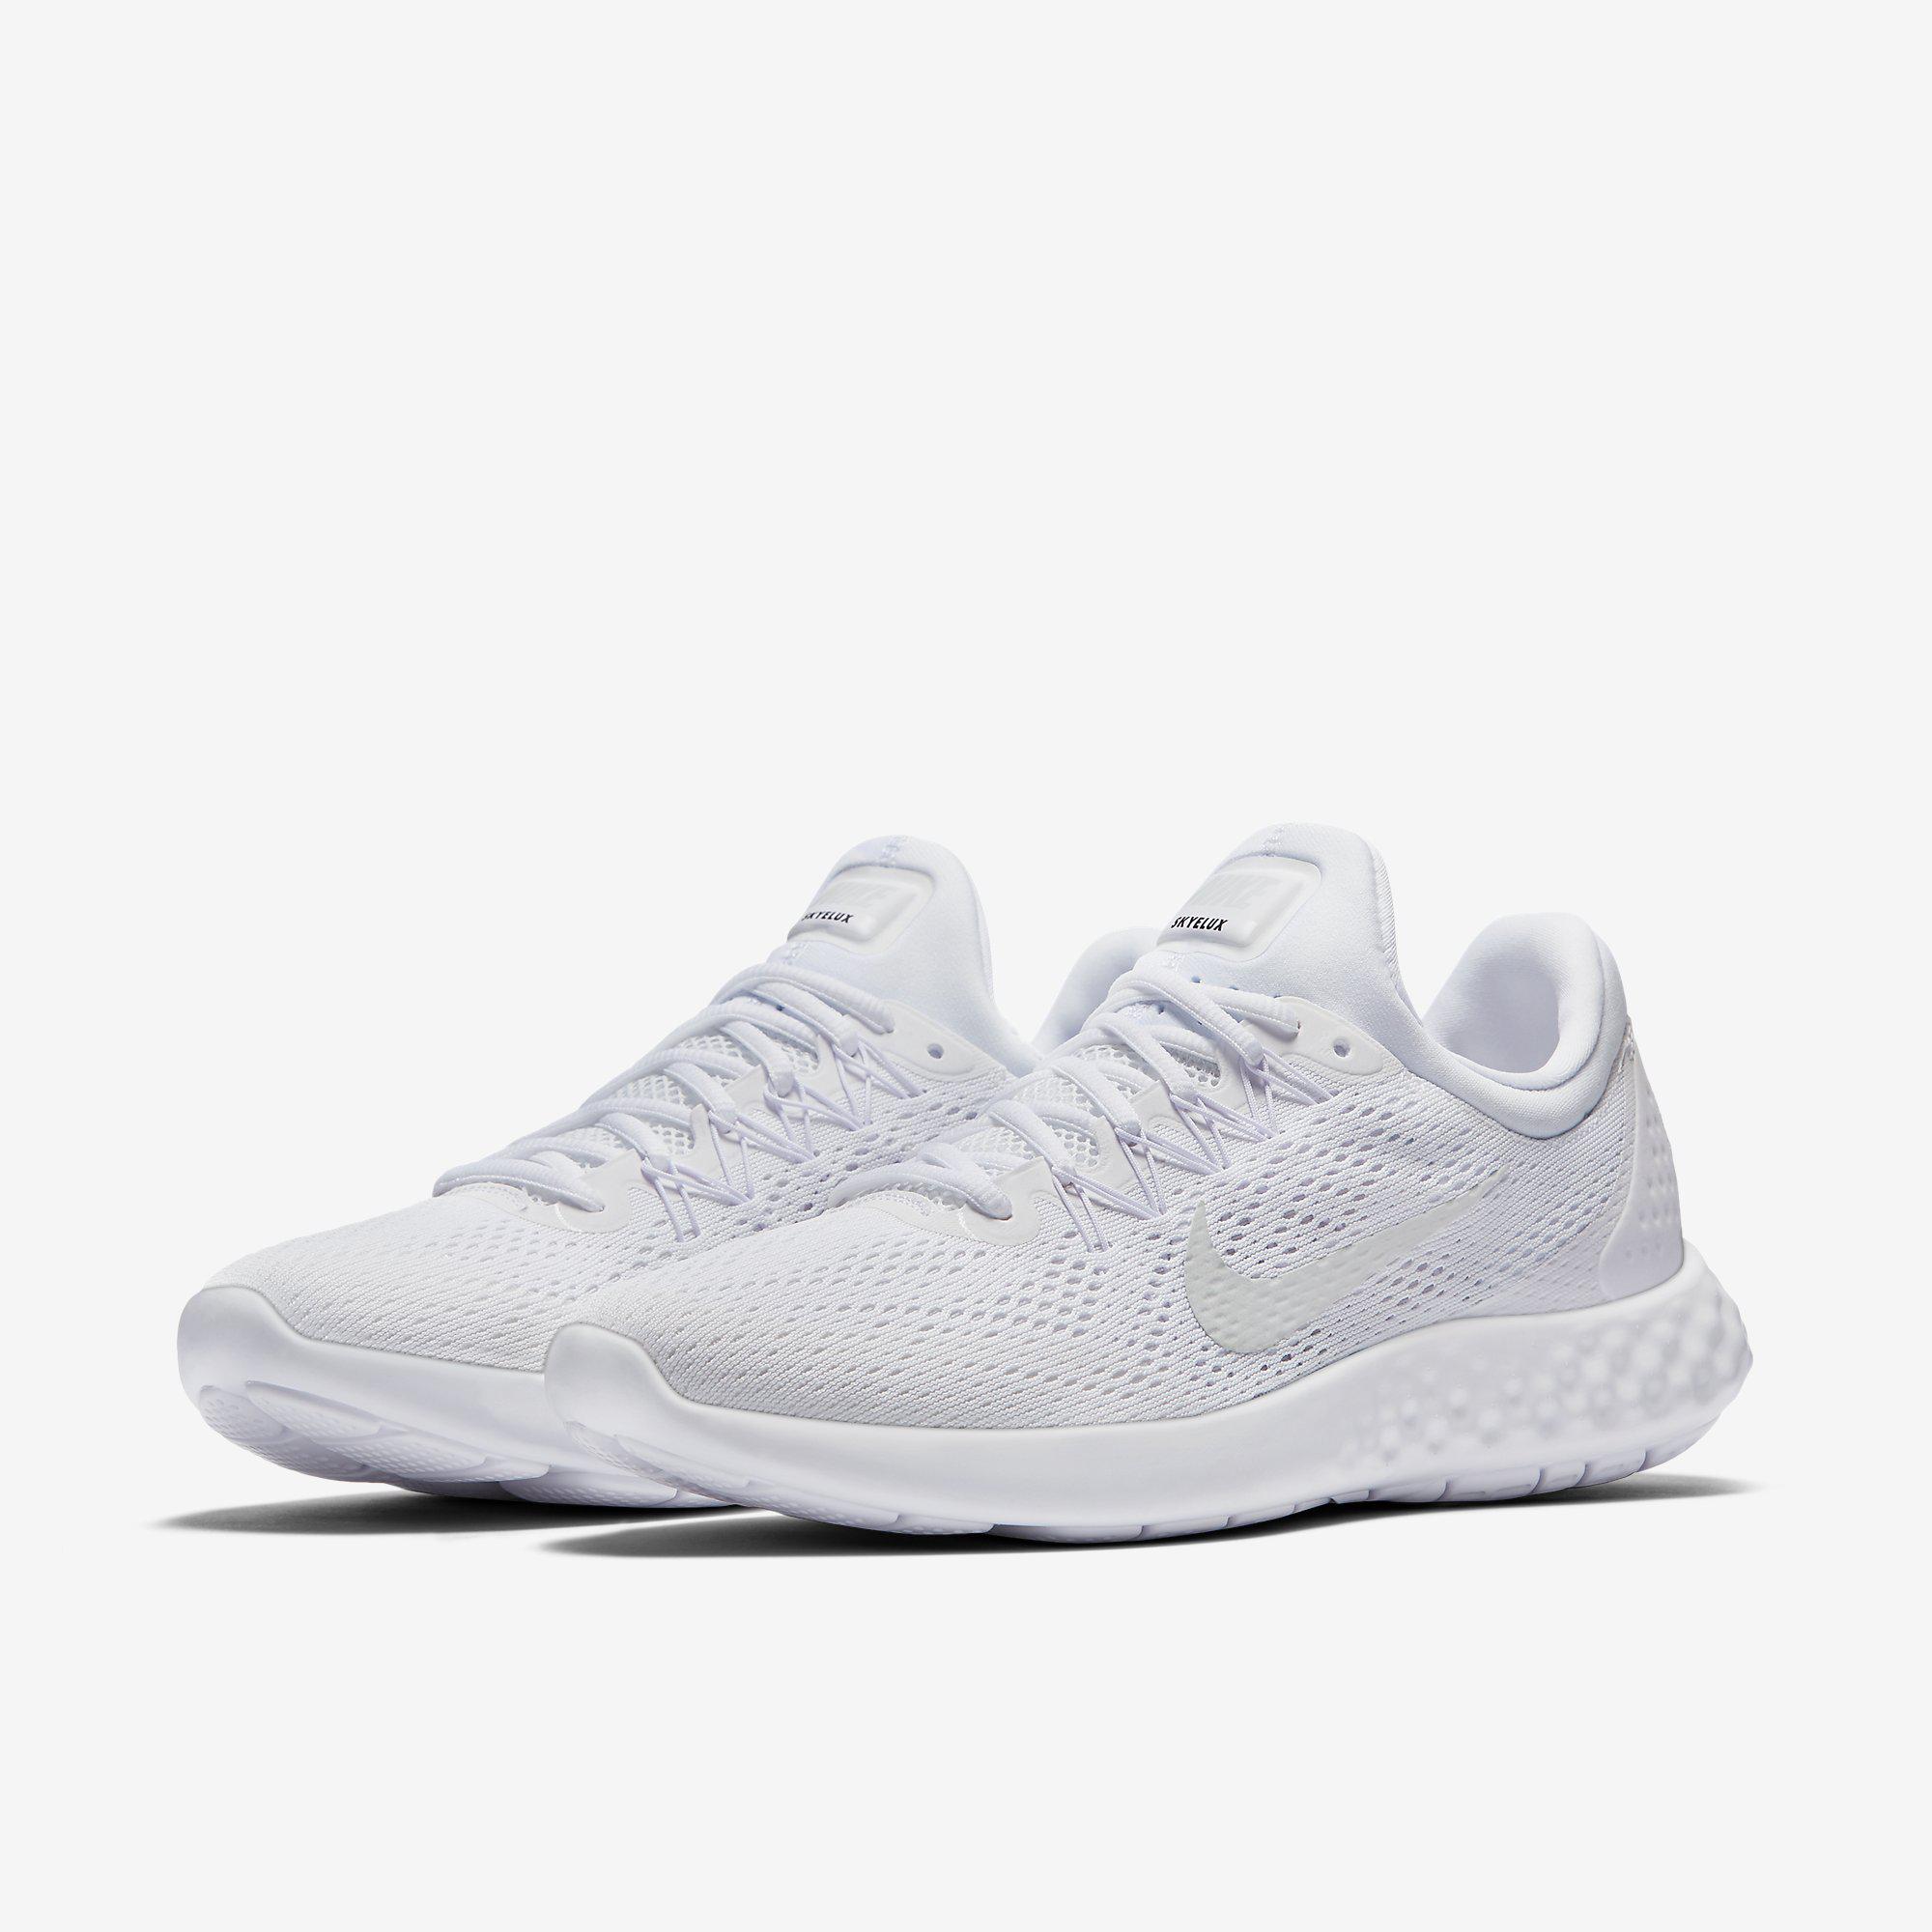  Nike  Mens Lunar Skyelux Running  Shoes  White  Tennisnuts com